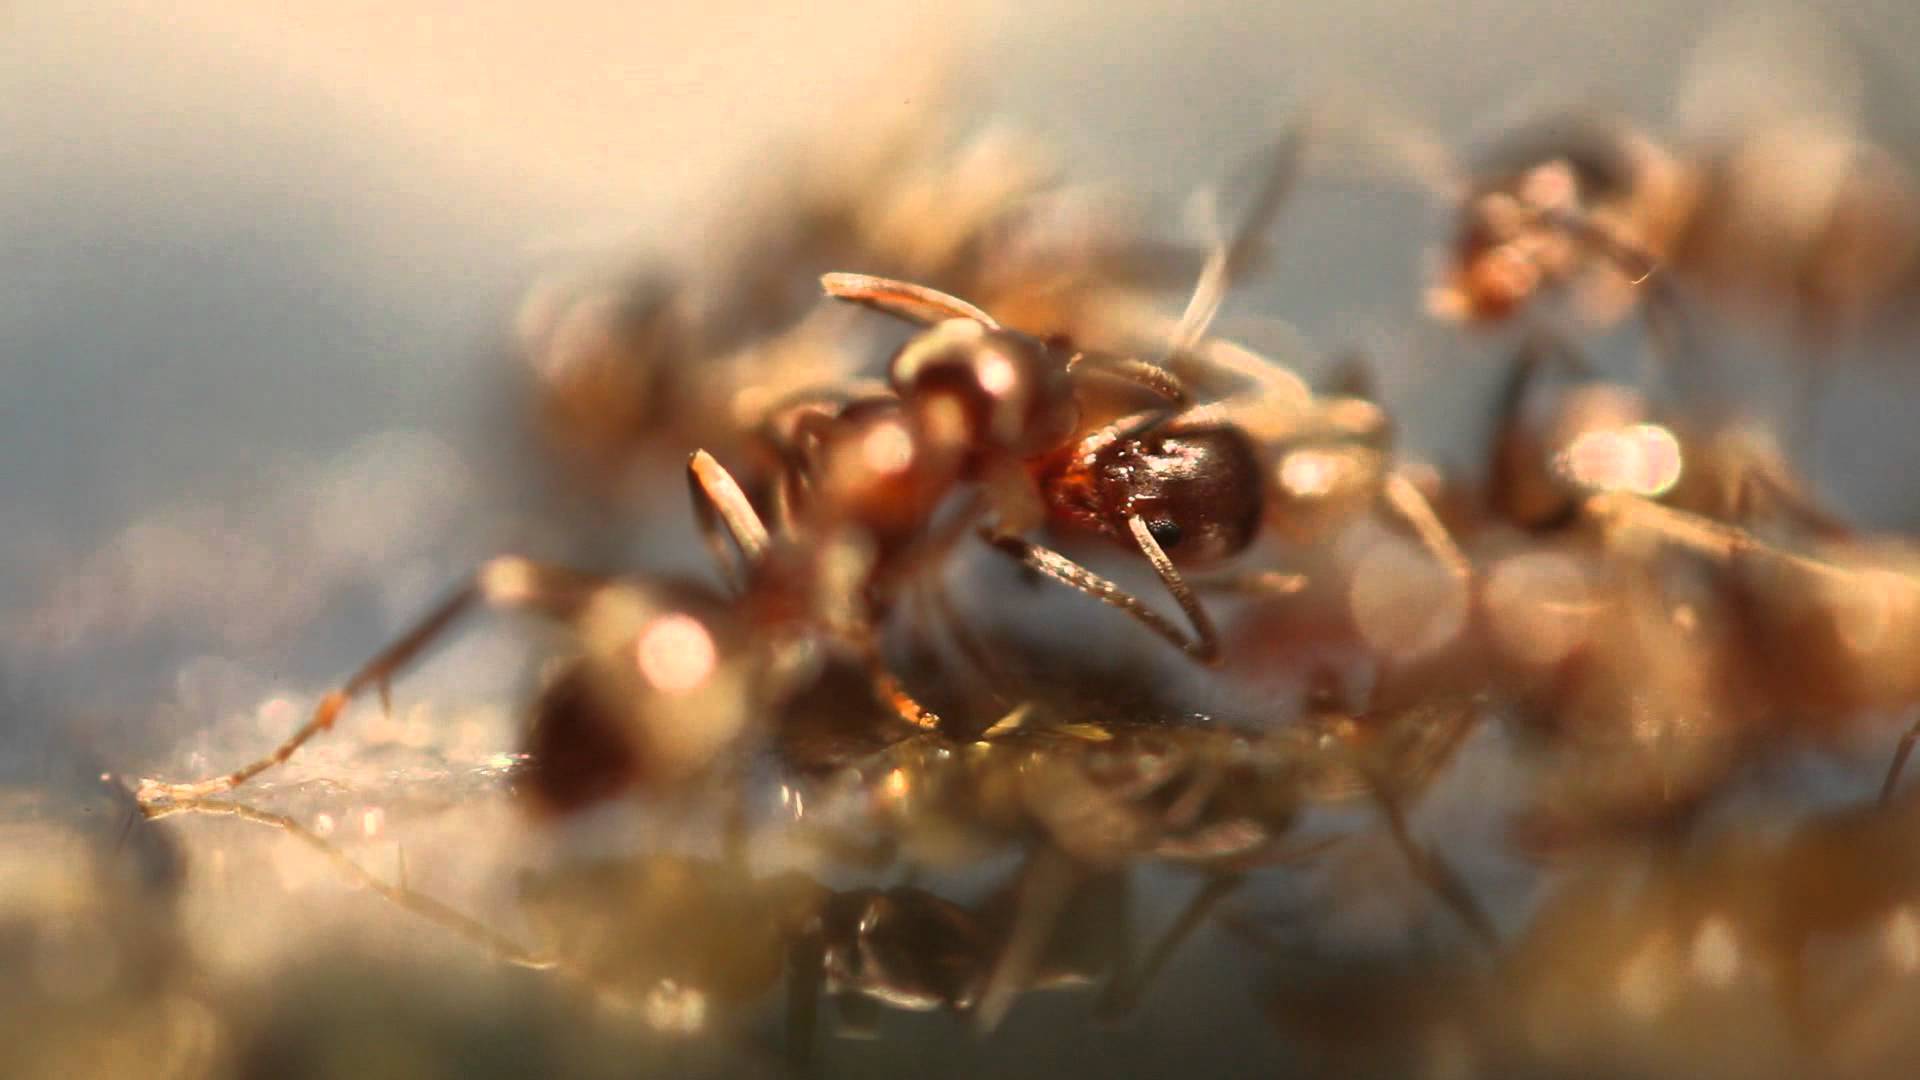 California Ants Macro Video HD - YouTube